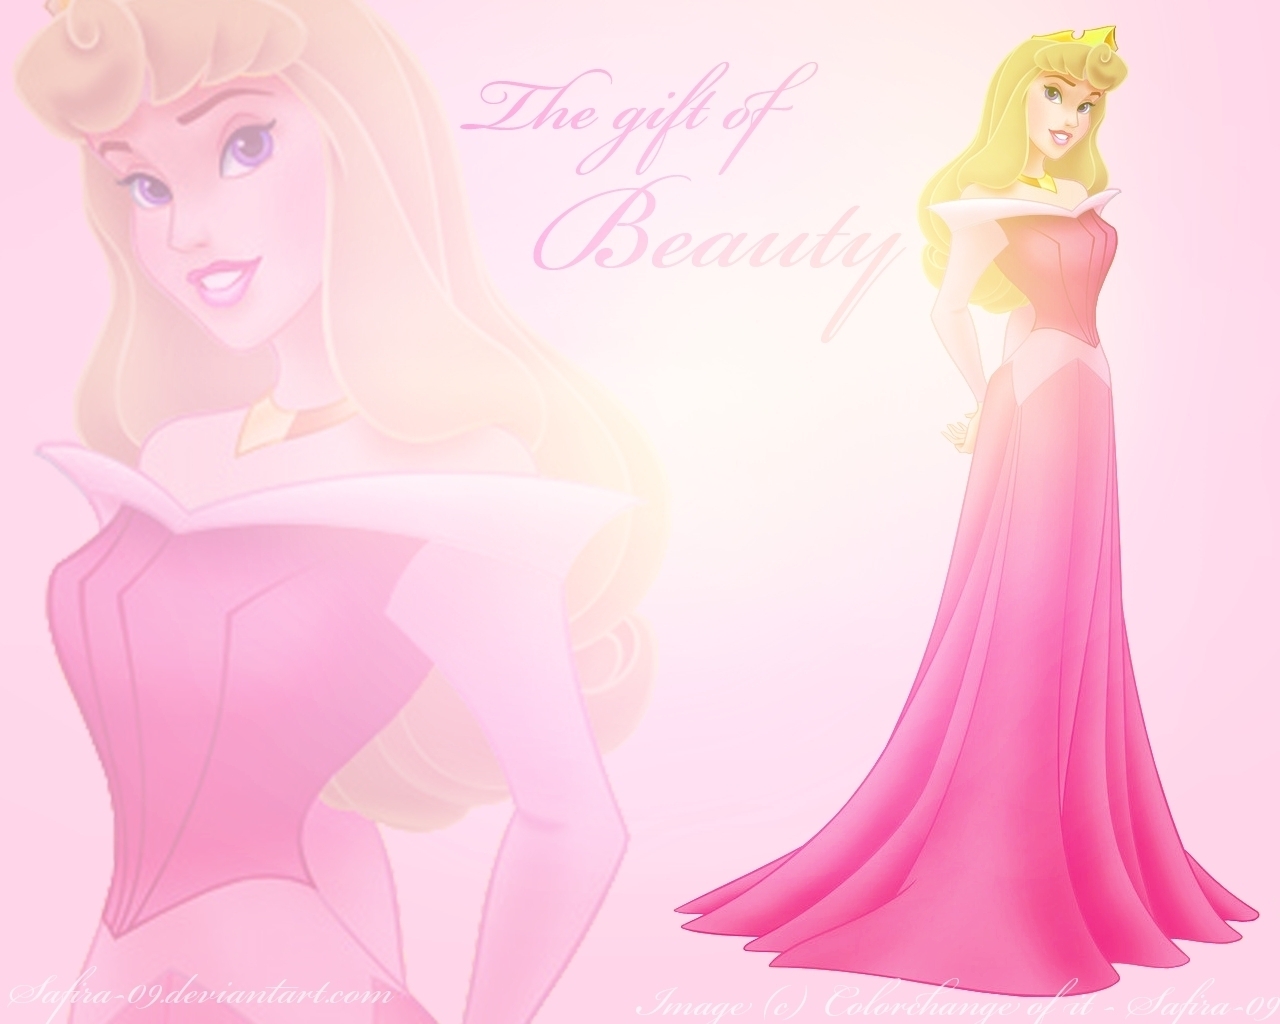 Aurora Princess Wallpaper